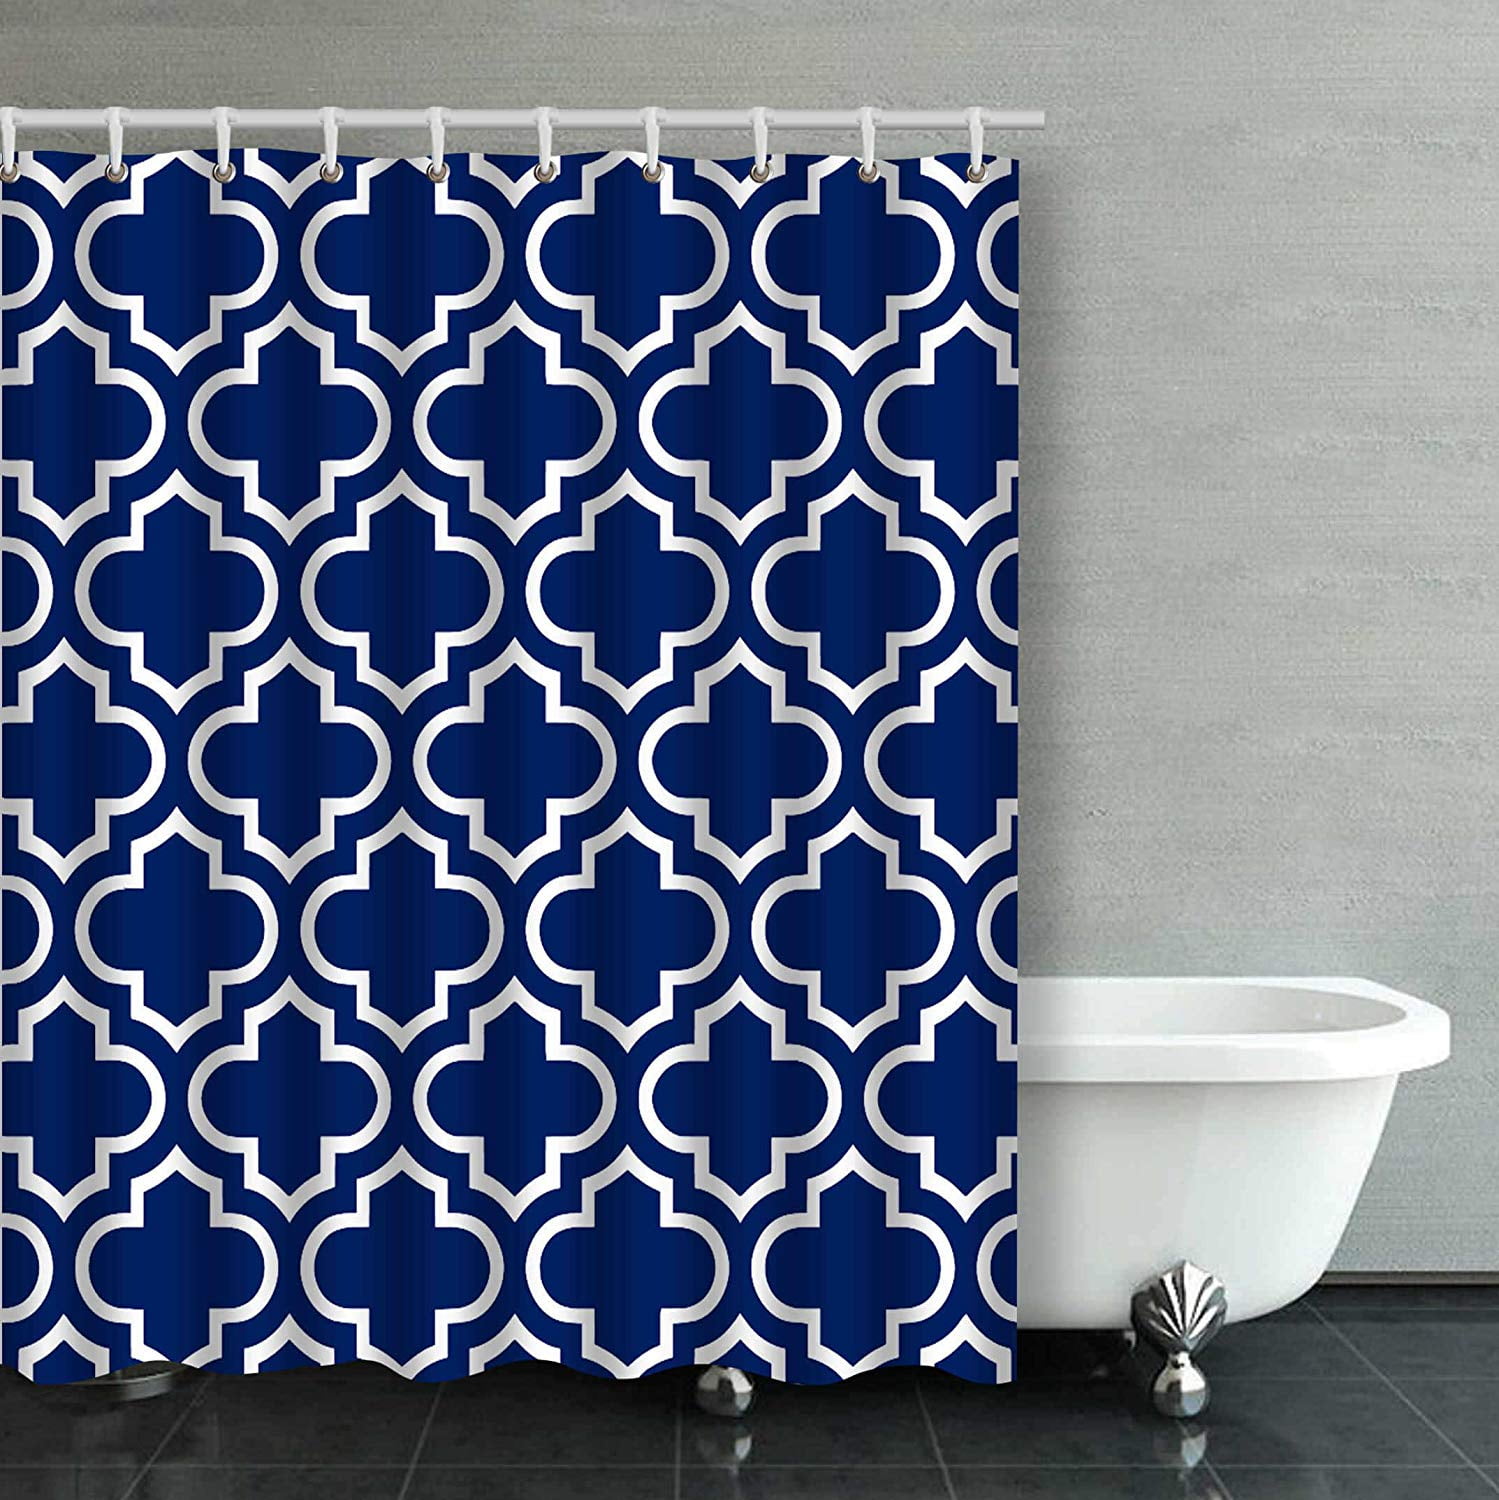 BPBOP Royal Blue And White Moroccan Quatrefoil Design Classic Stripes Brief Design Bathroom